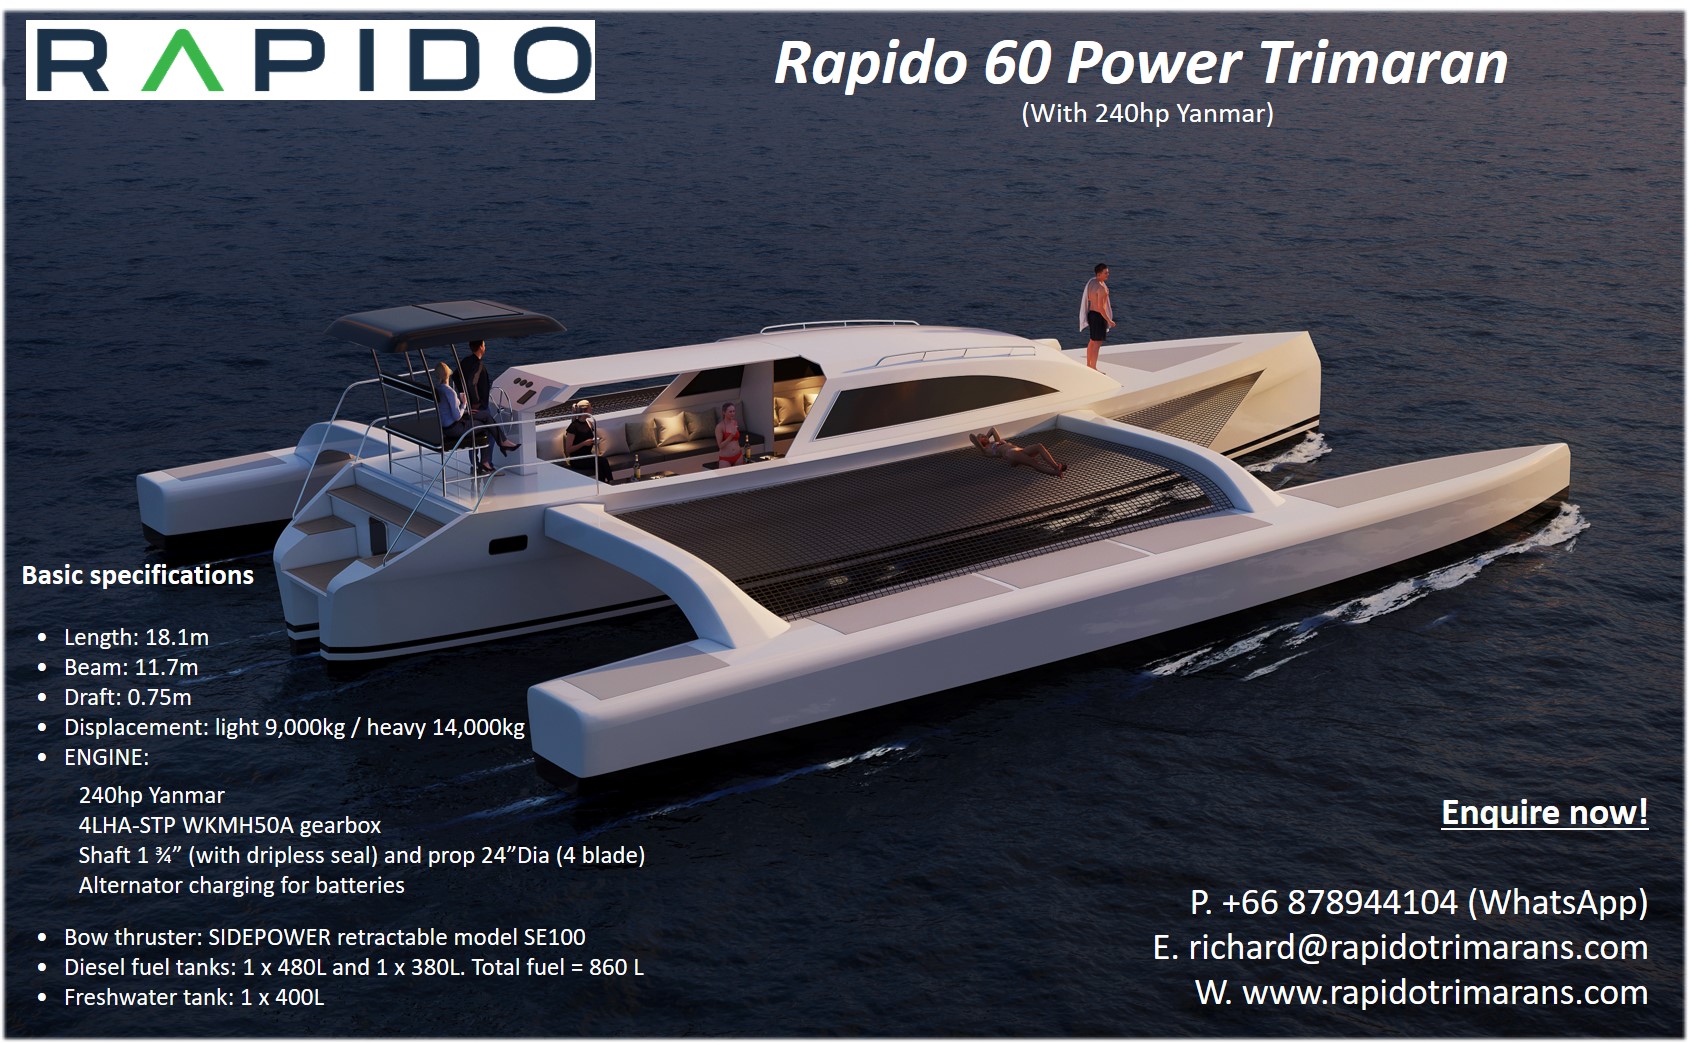 Rapido 60 Power Trimaran for sale